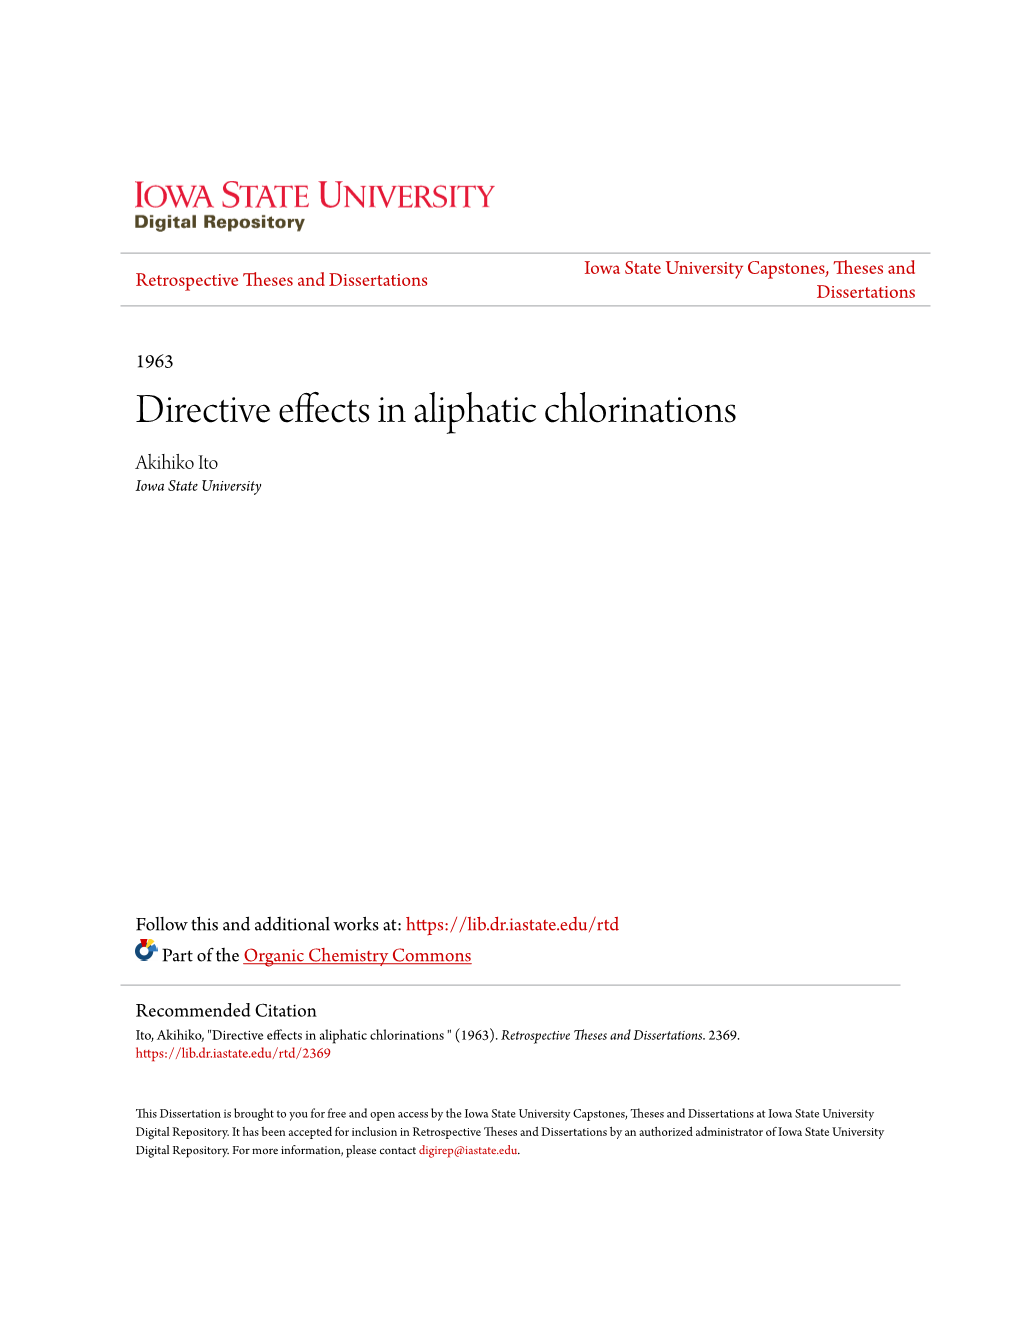 Directive Effects in Aliphatic Chlorinations Akihiko Ito Iowa State University